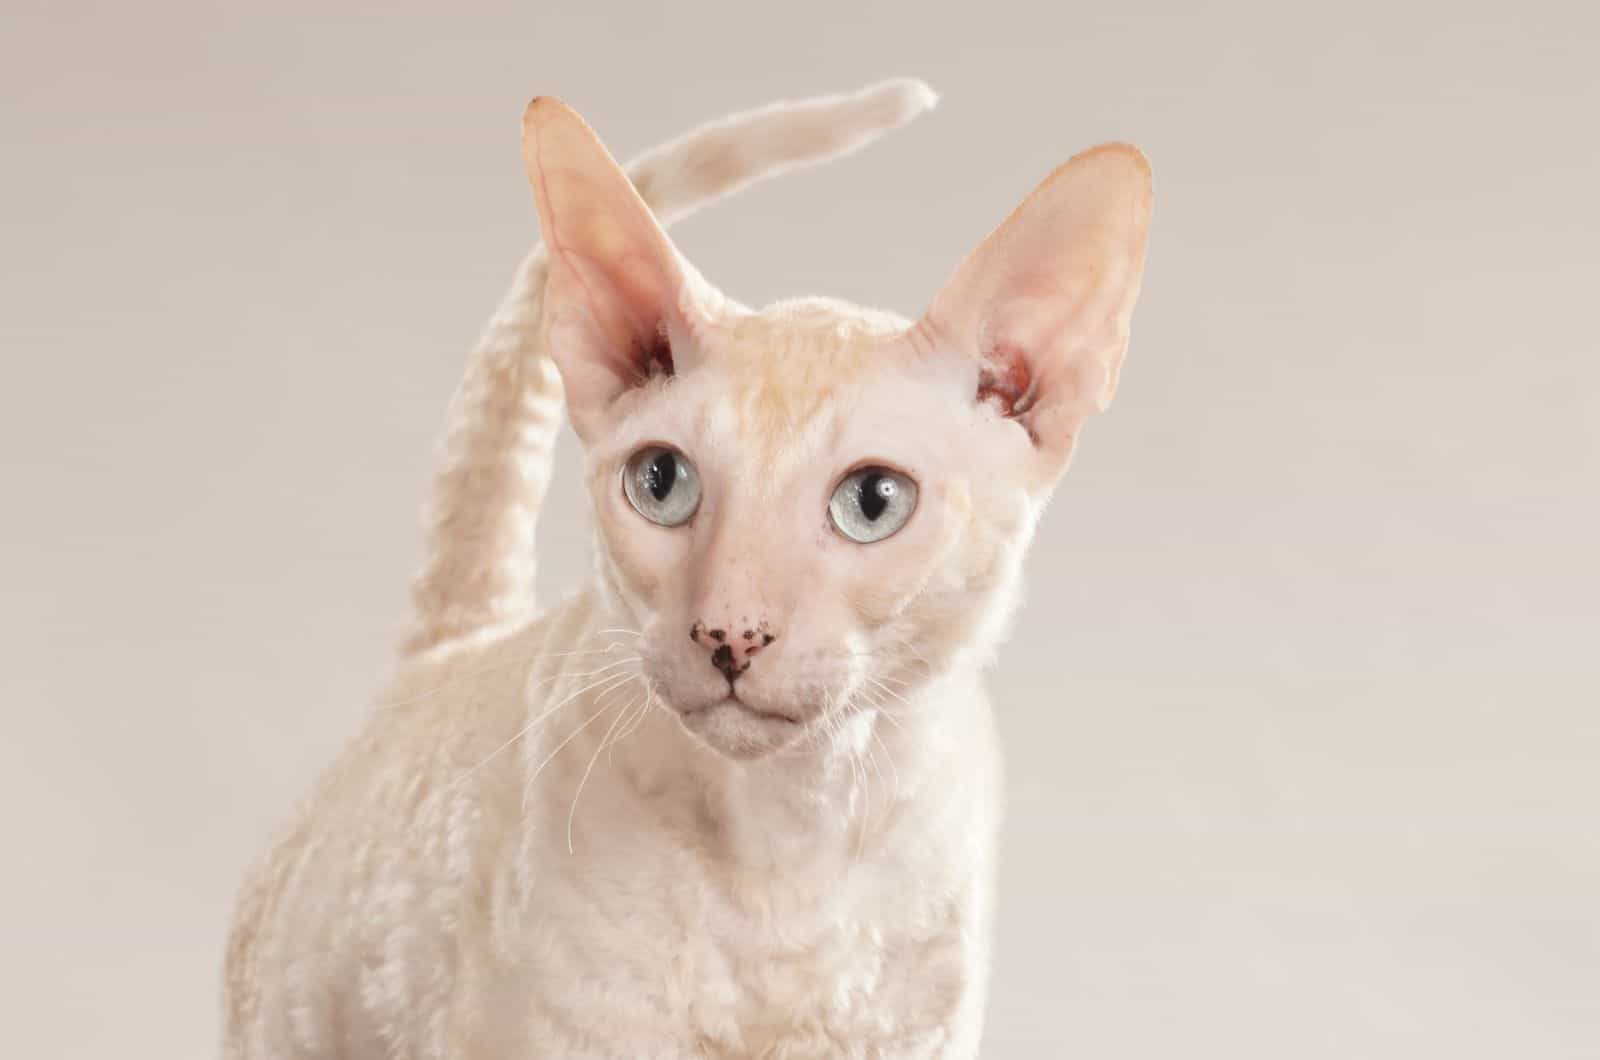 cream colored cat walks towards camera, breed cornish rex cat